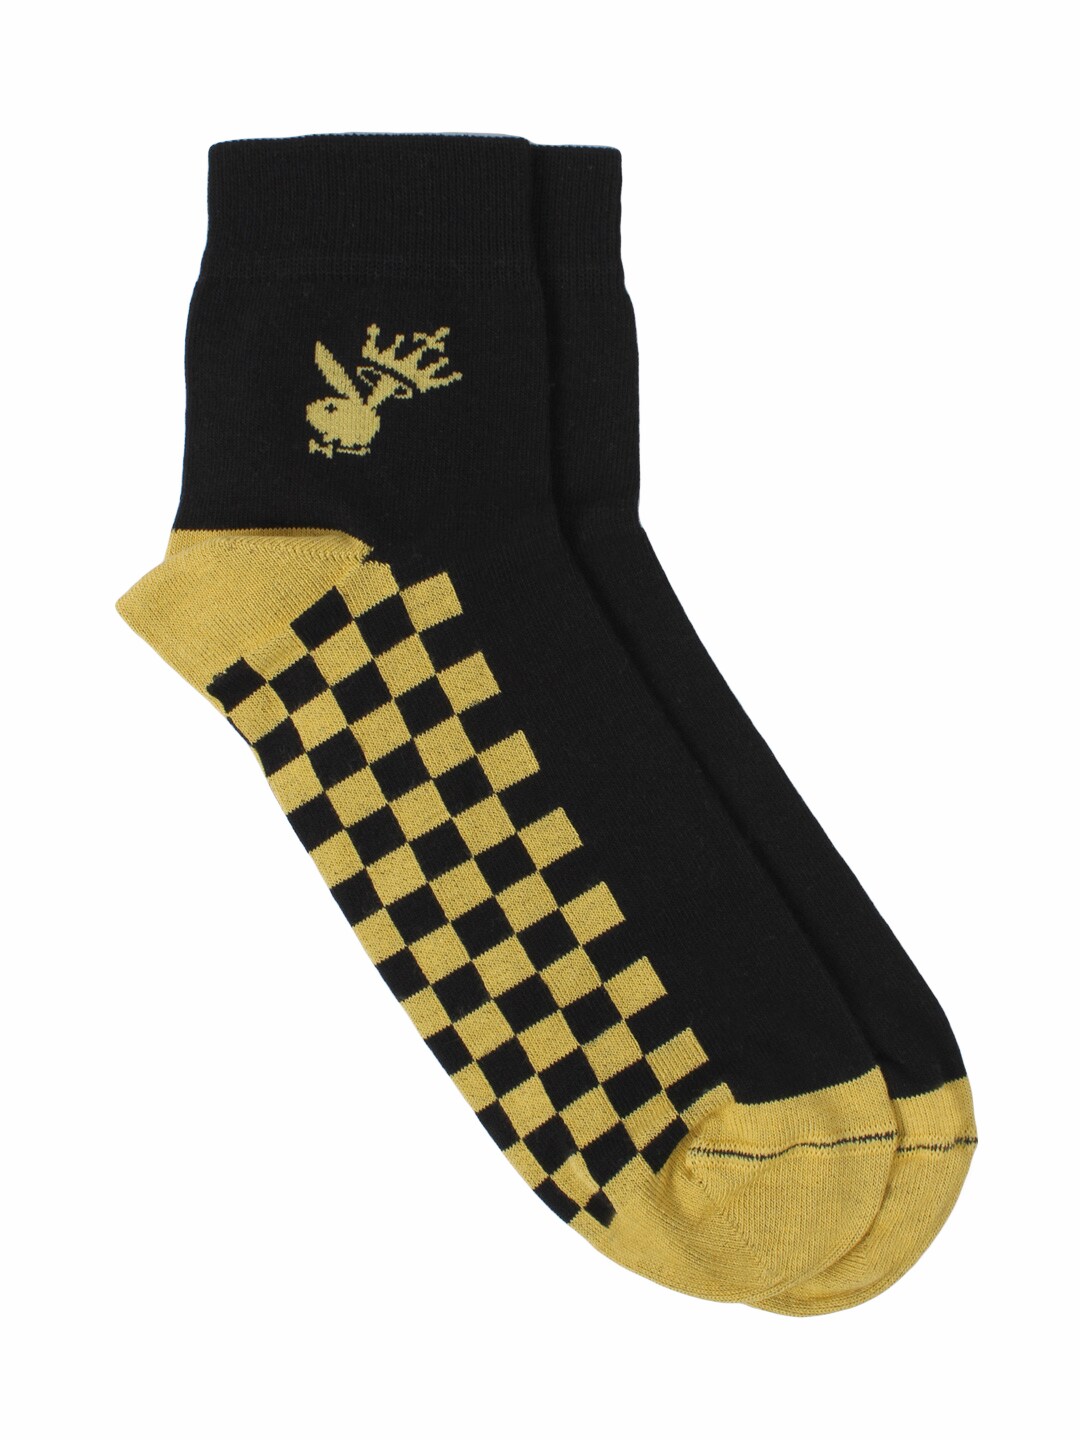 Playboy Men Yellow & Black Socks